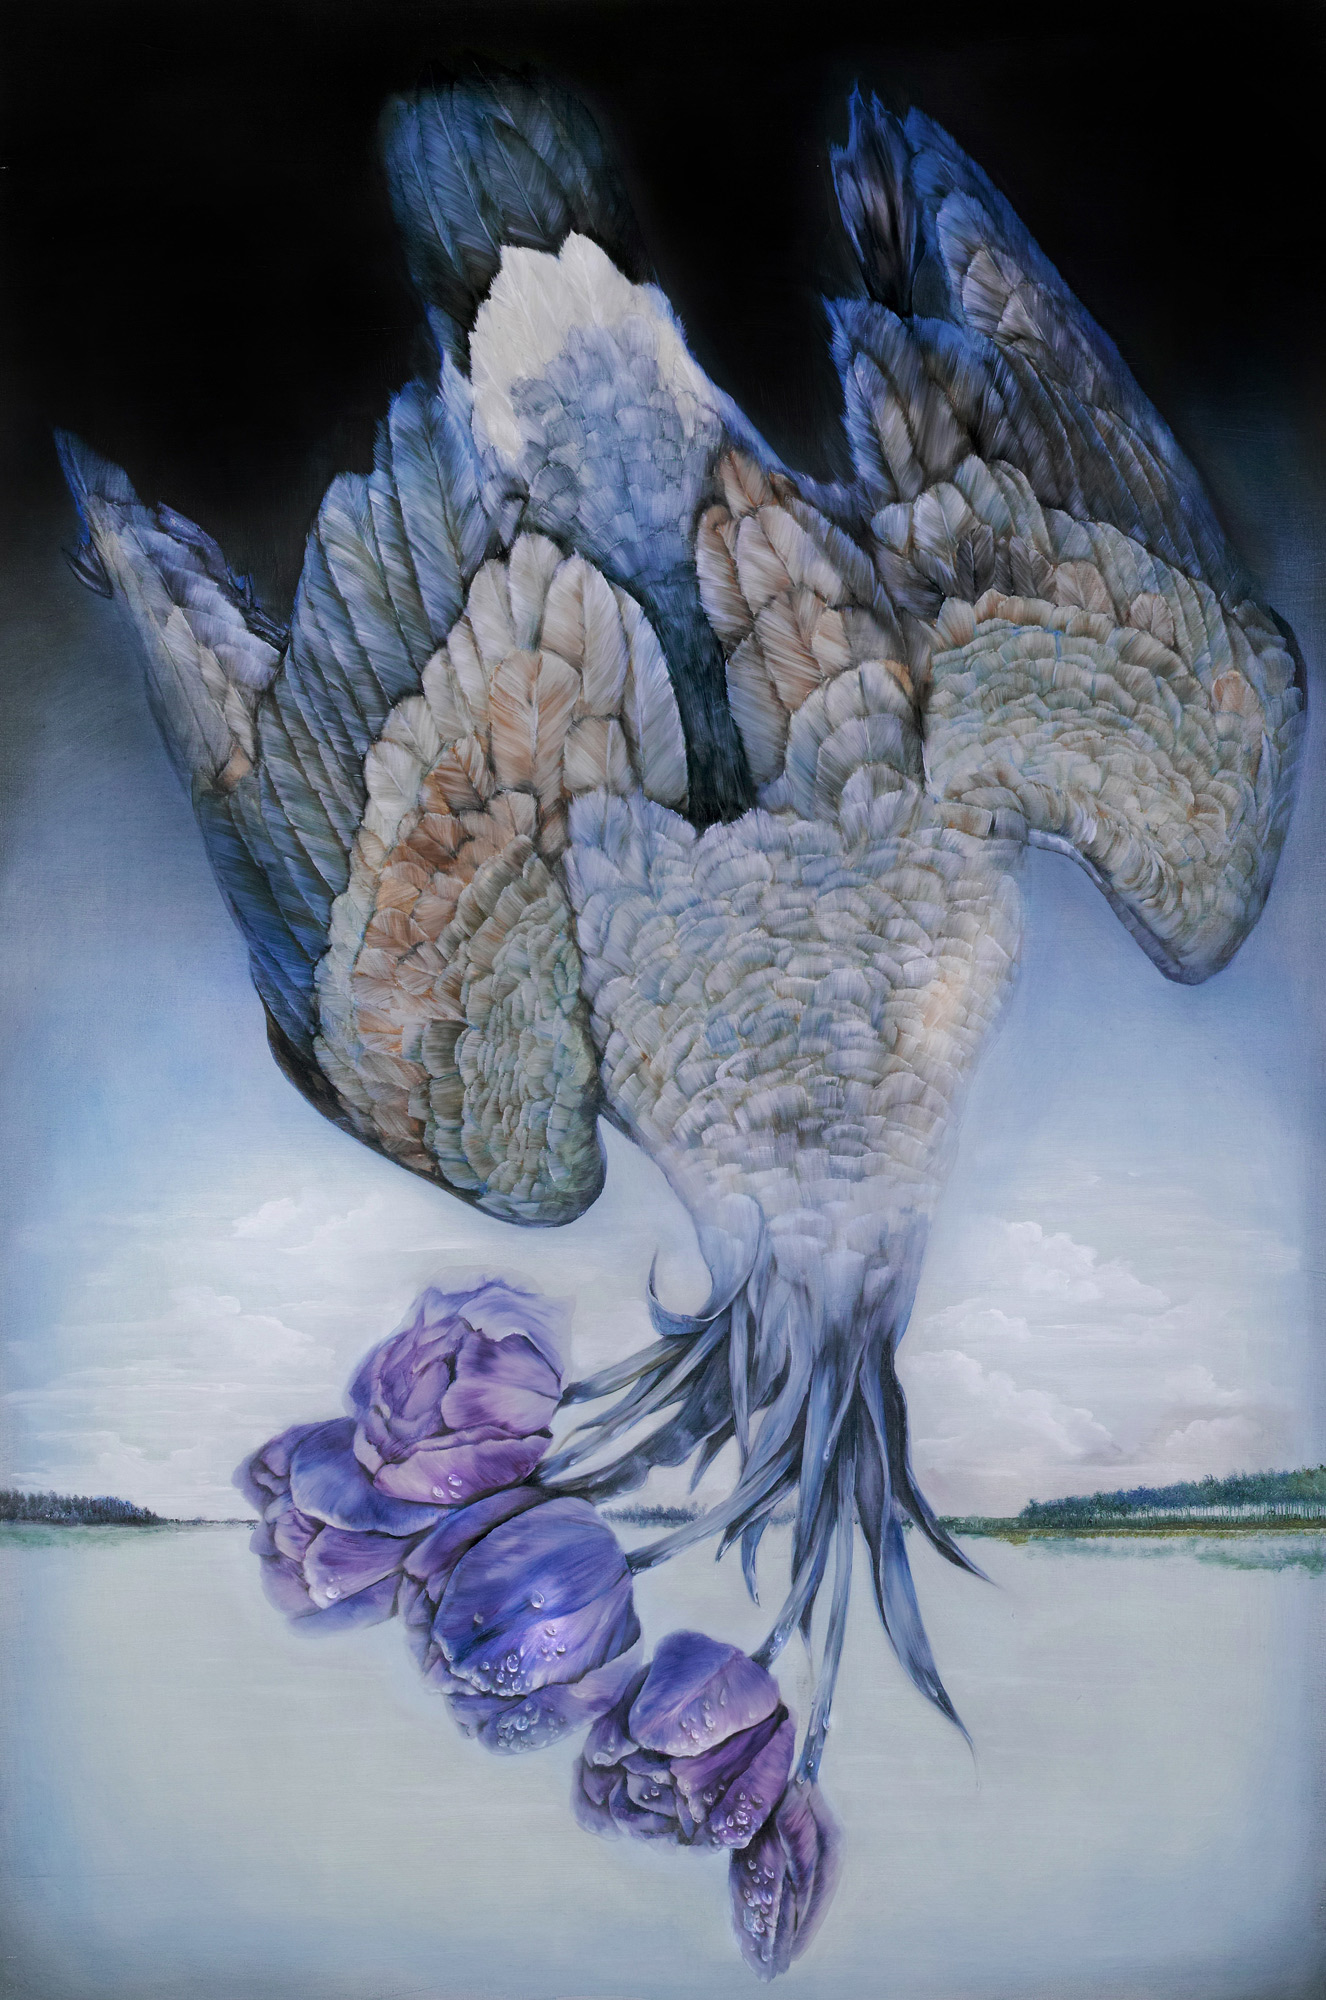 Wildlife, Fruit, and Vines Merge in Surreal Paintings by Nunzio Paci